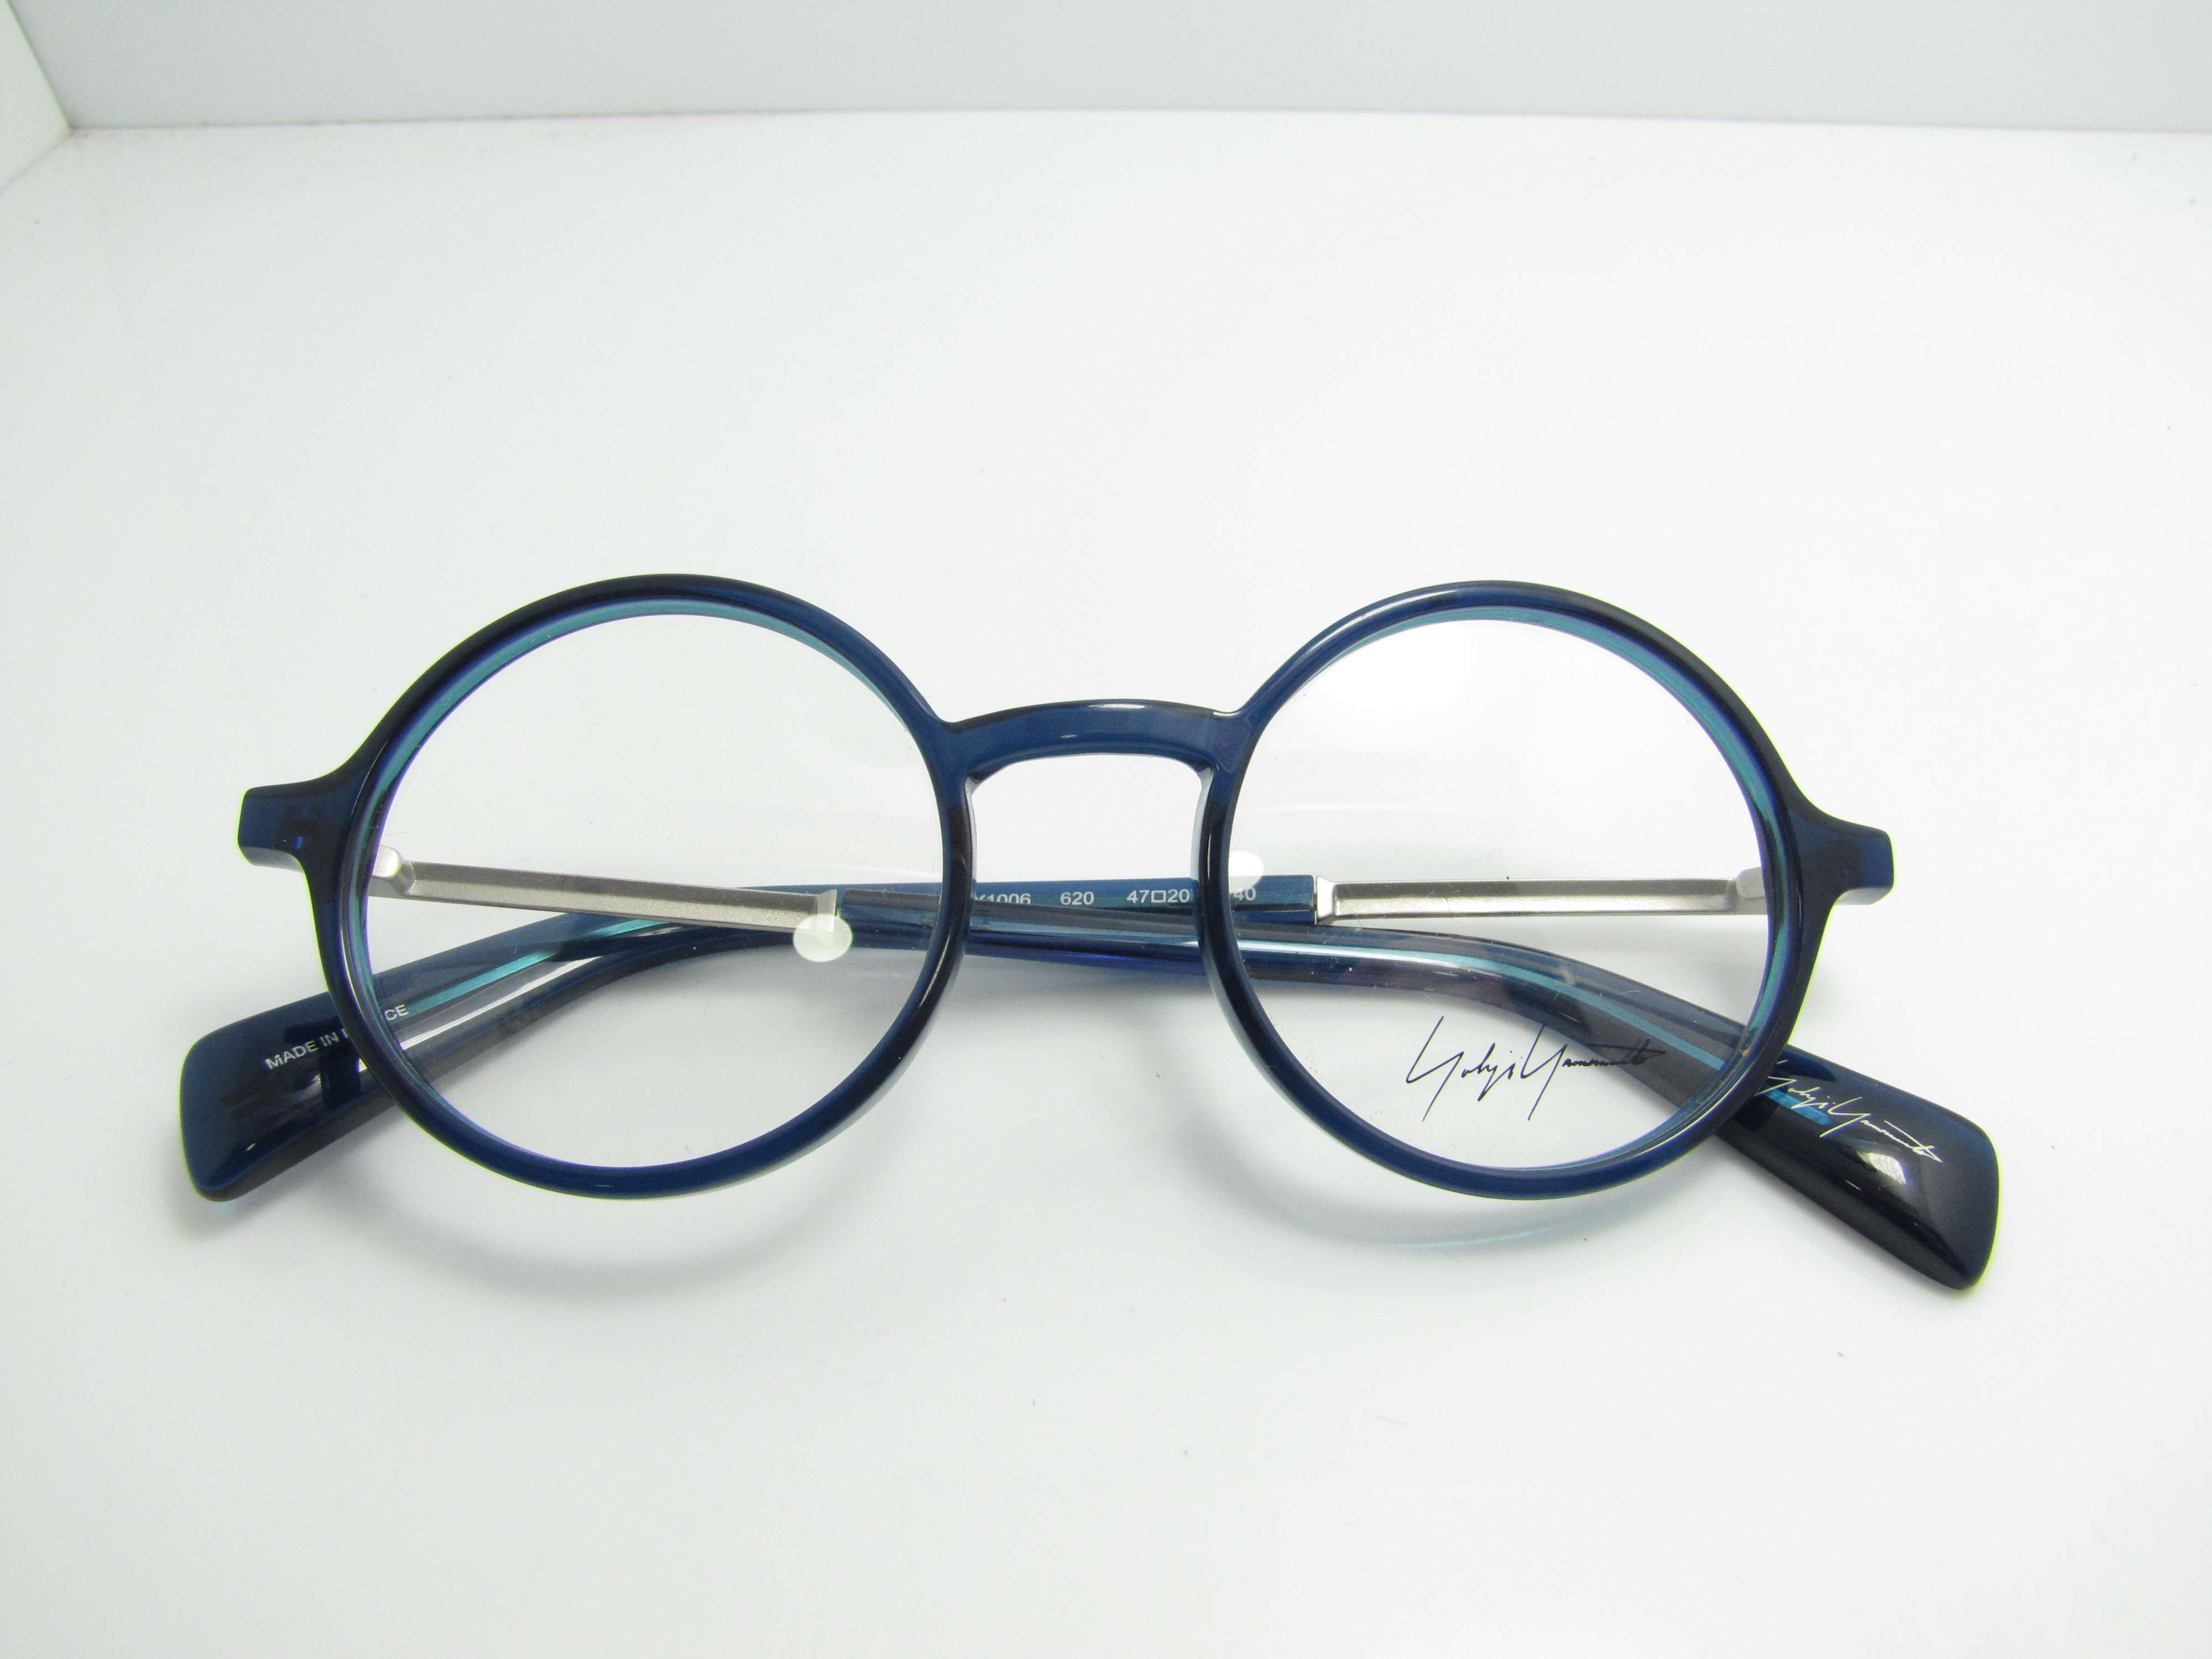 Yohji Yamamoto Eyeglasses New Eyewear Frames Optical Glasses Original ...